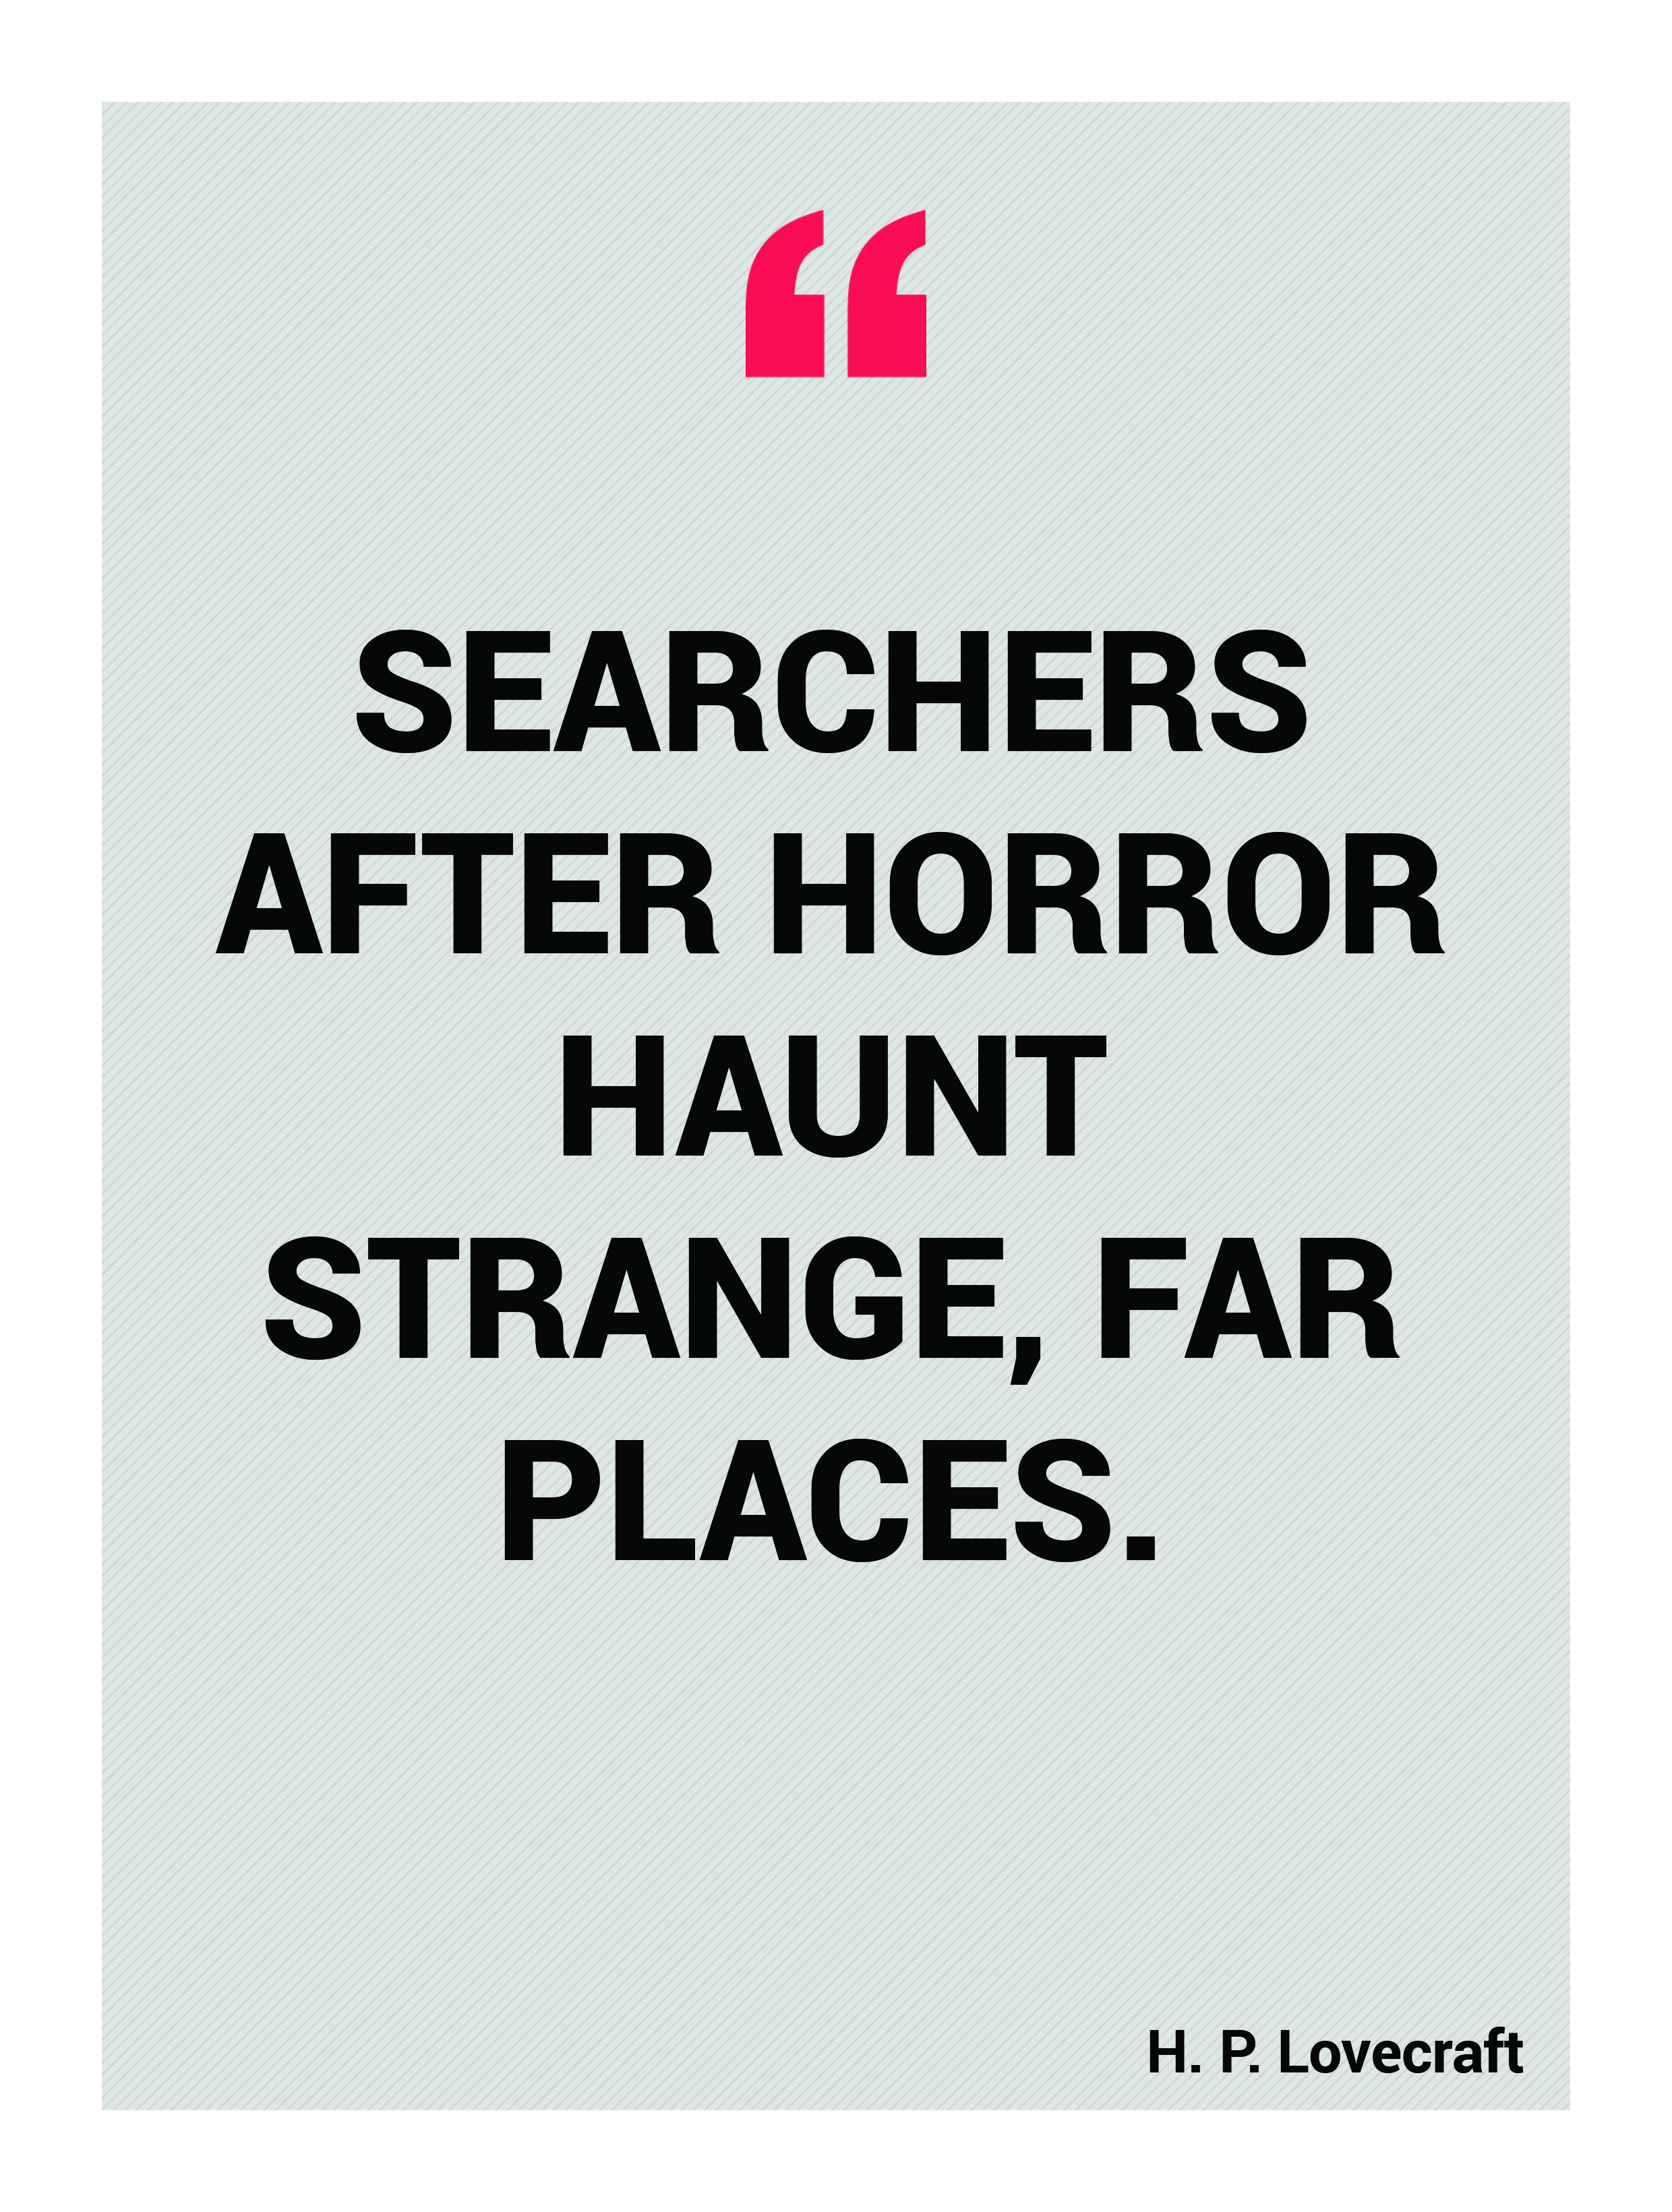 Searchers after horror haunt strange, far places. H. P. Lovecraft